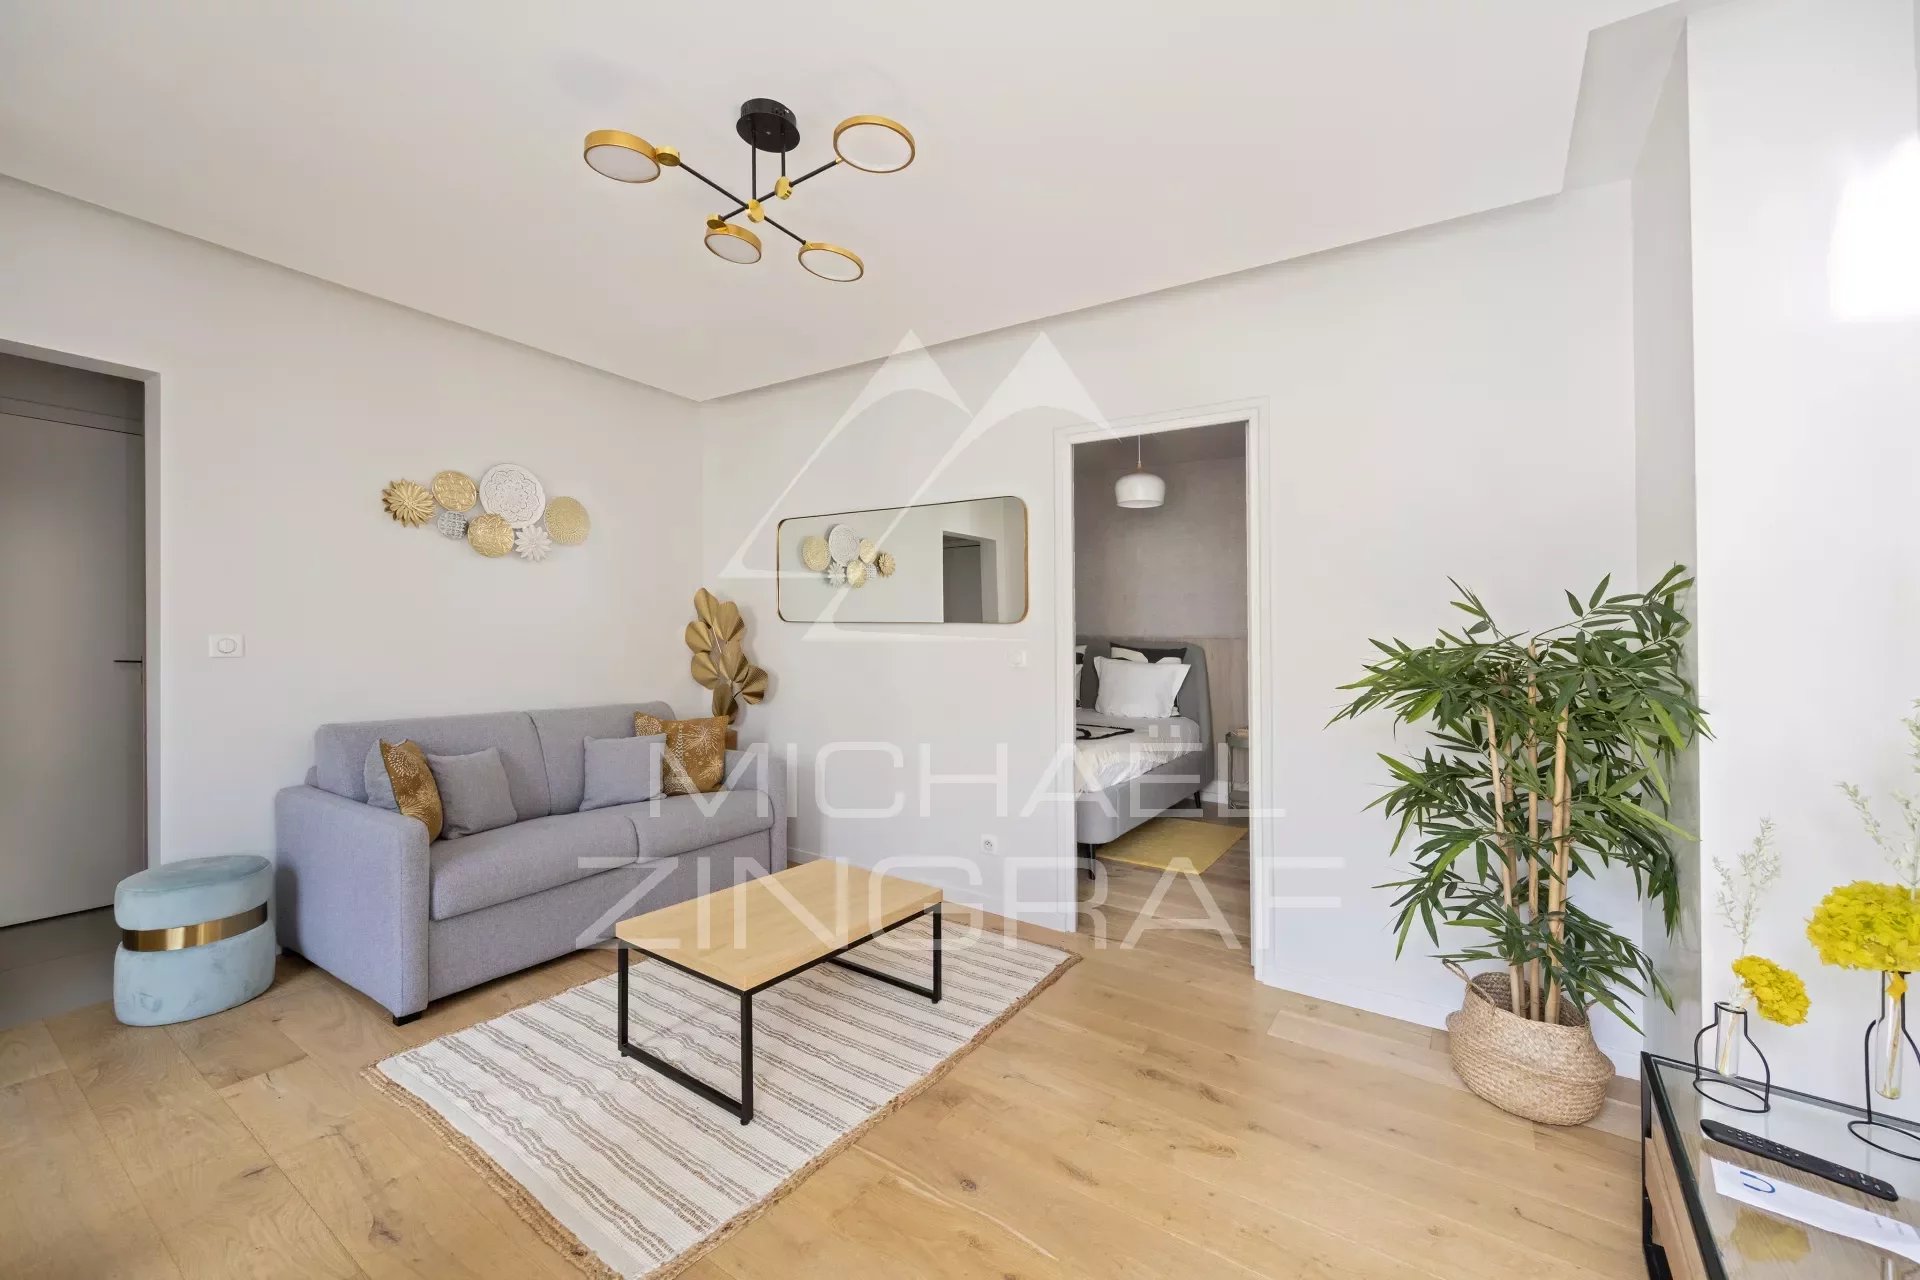 Sale apartment - Marais - completely renovated